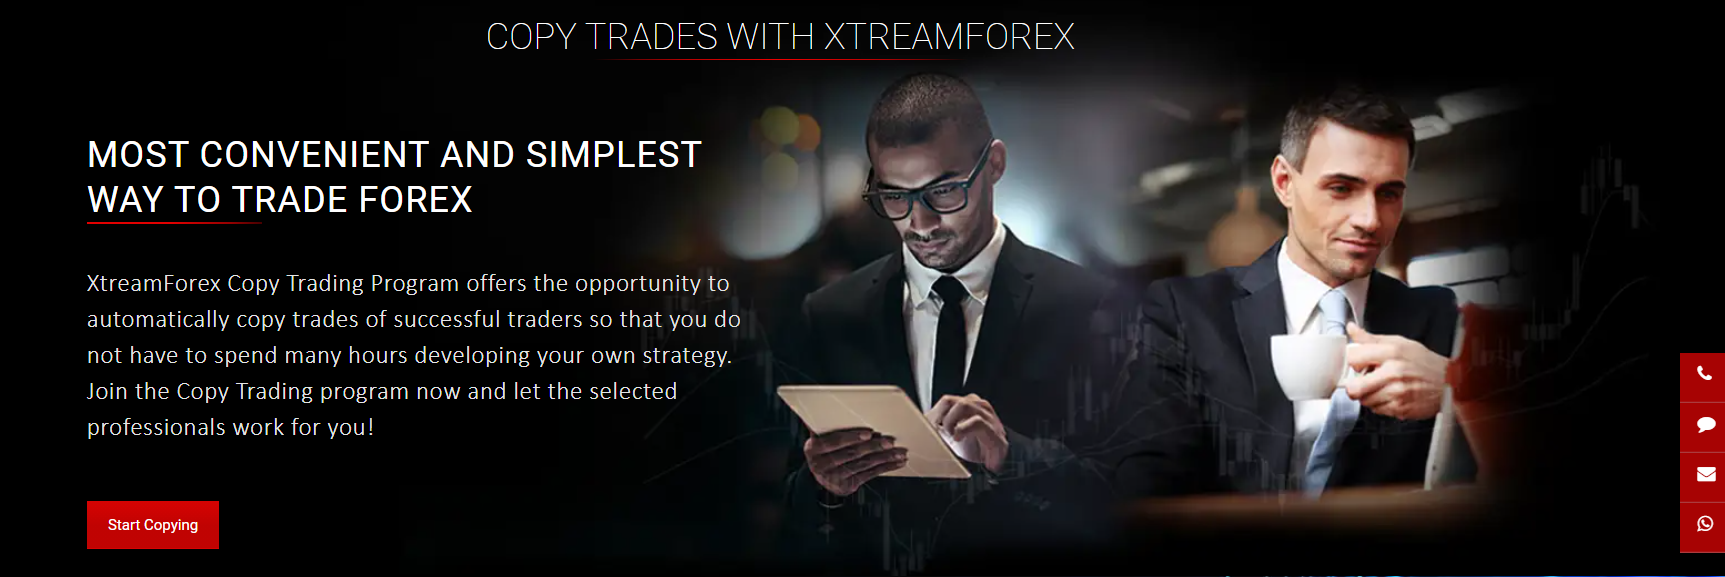 xtreamforex торговые условия 